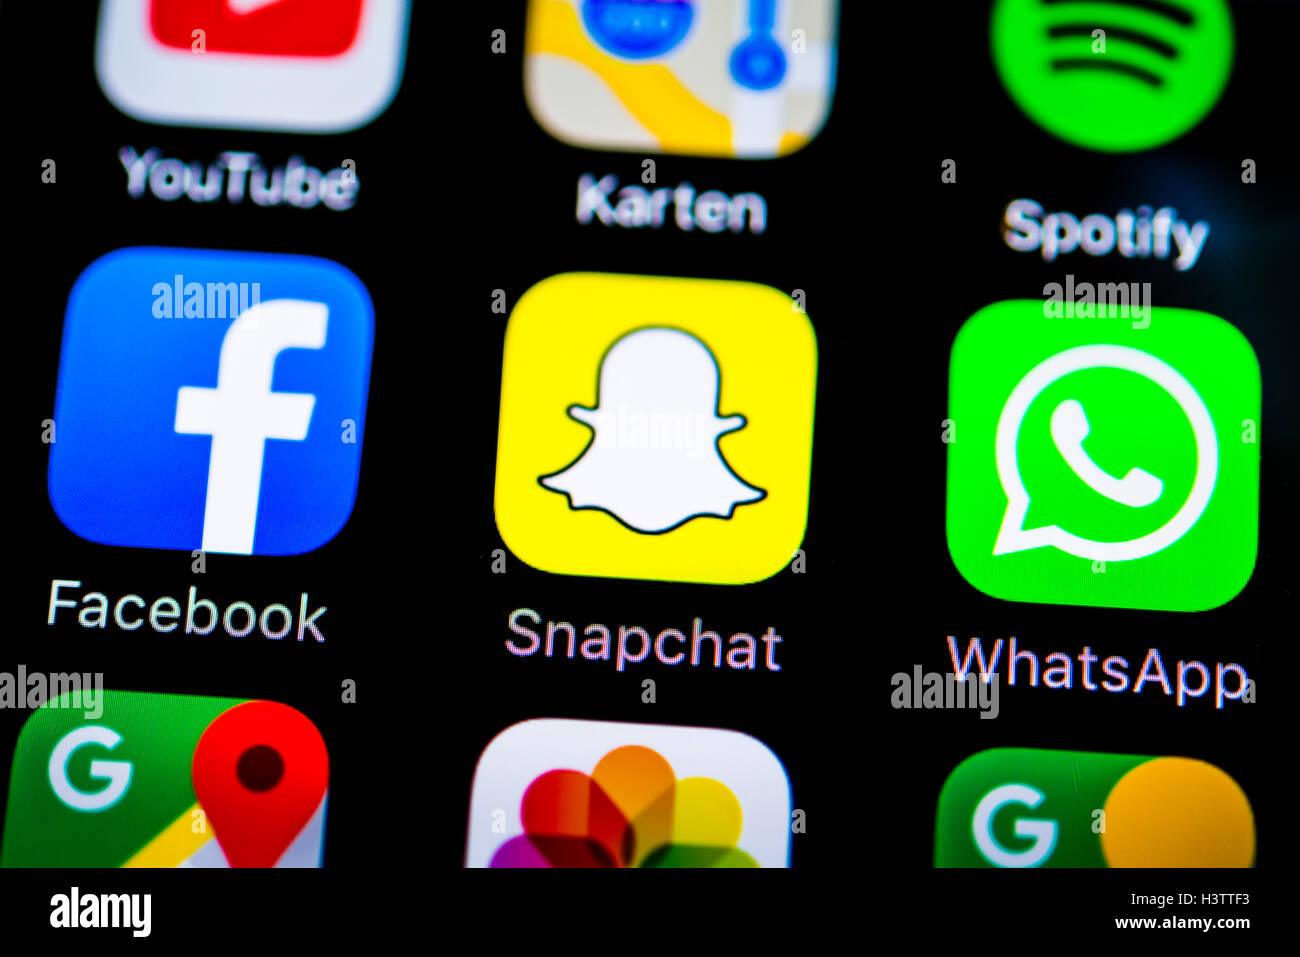 Smartphone Bildschirm Mit Snapchat Whatsapp Facebook App Symbole Stockfotografie Alamy